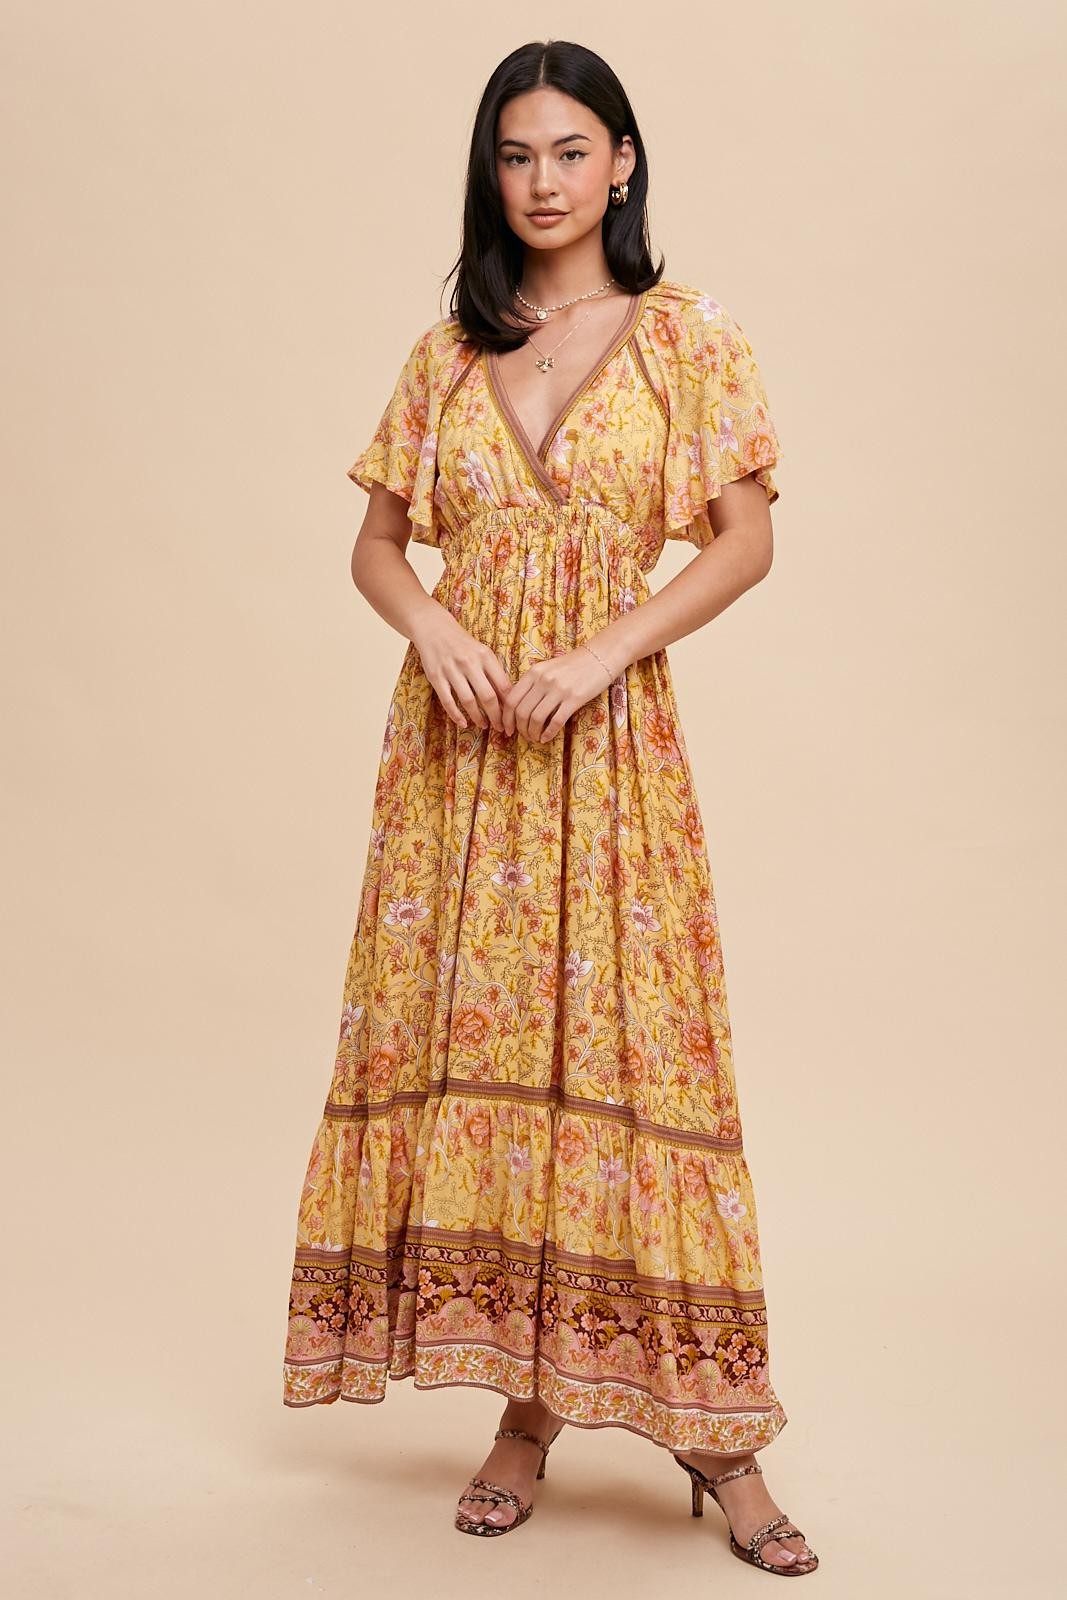 Boho Floral Maxi Dress